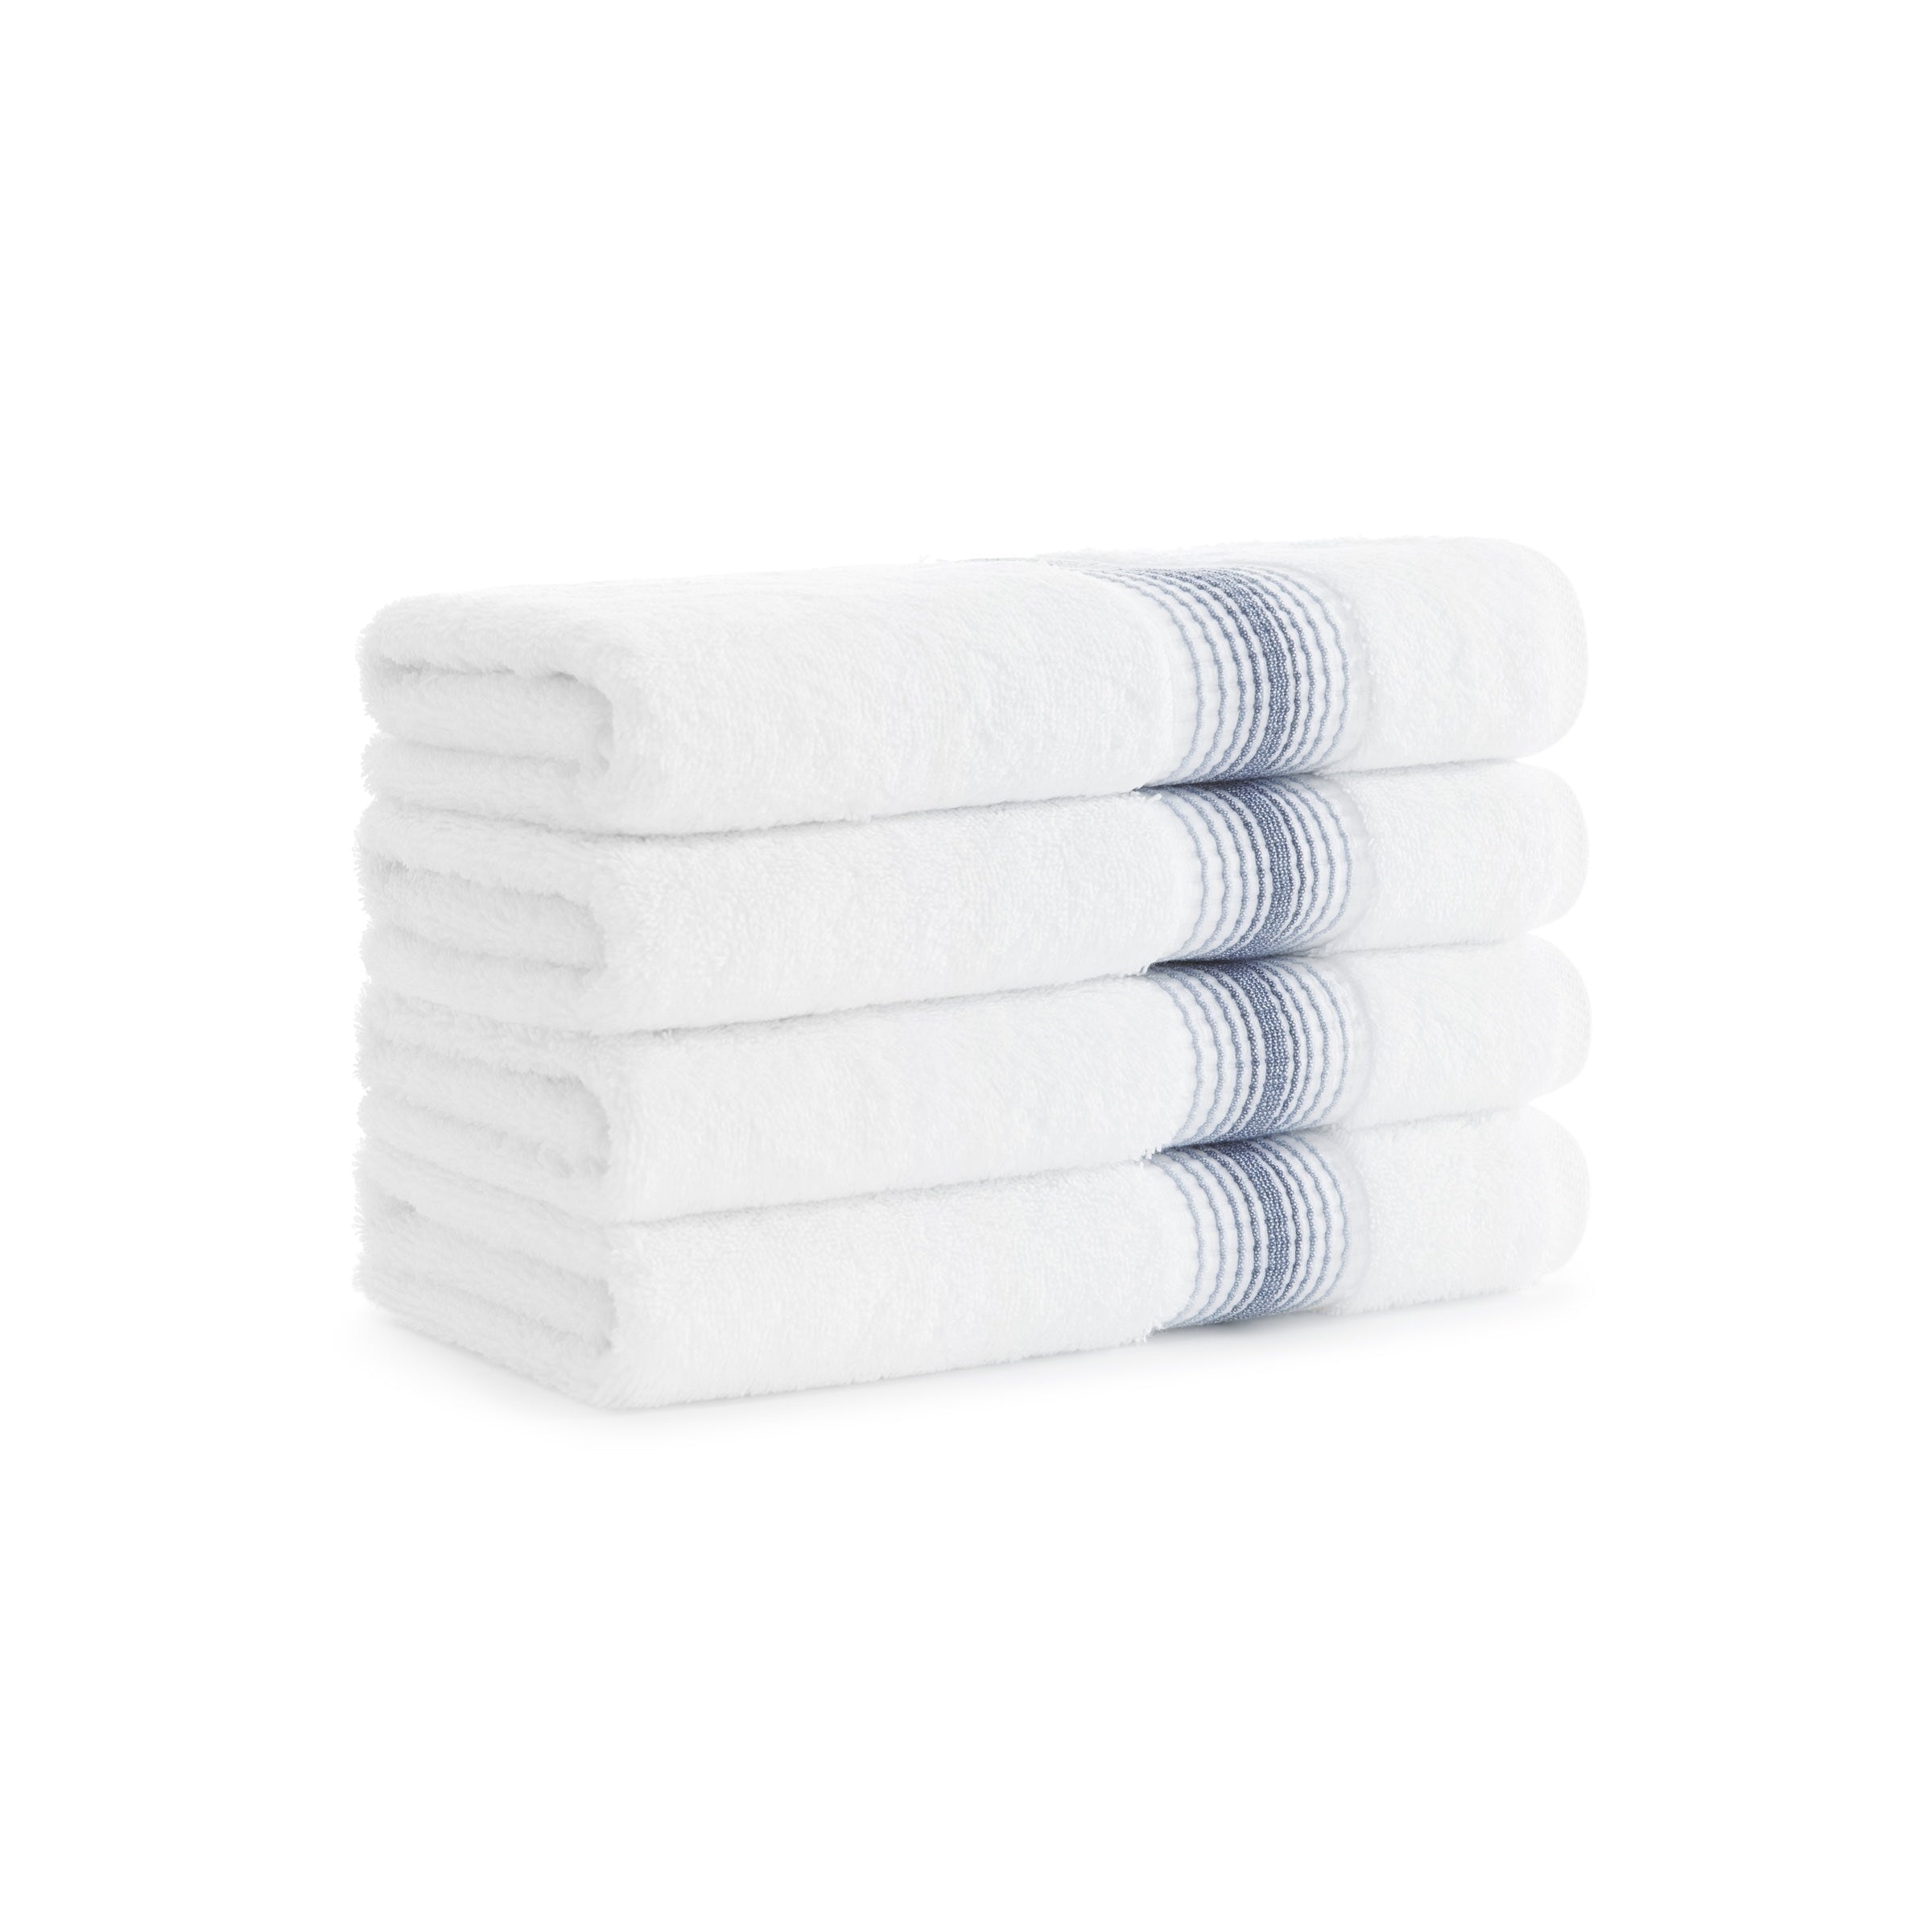 Home - Vague Hand Towels - 8 Piece Hand Towels, zero twist Turkish